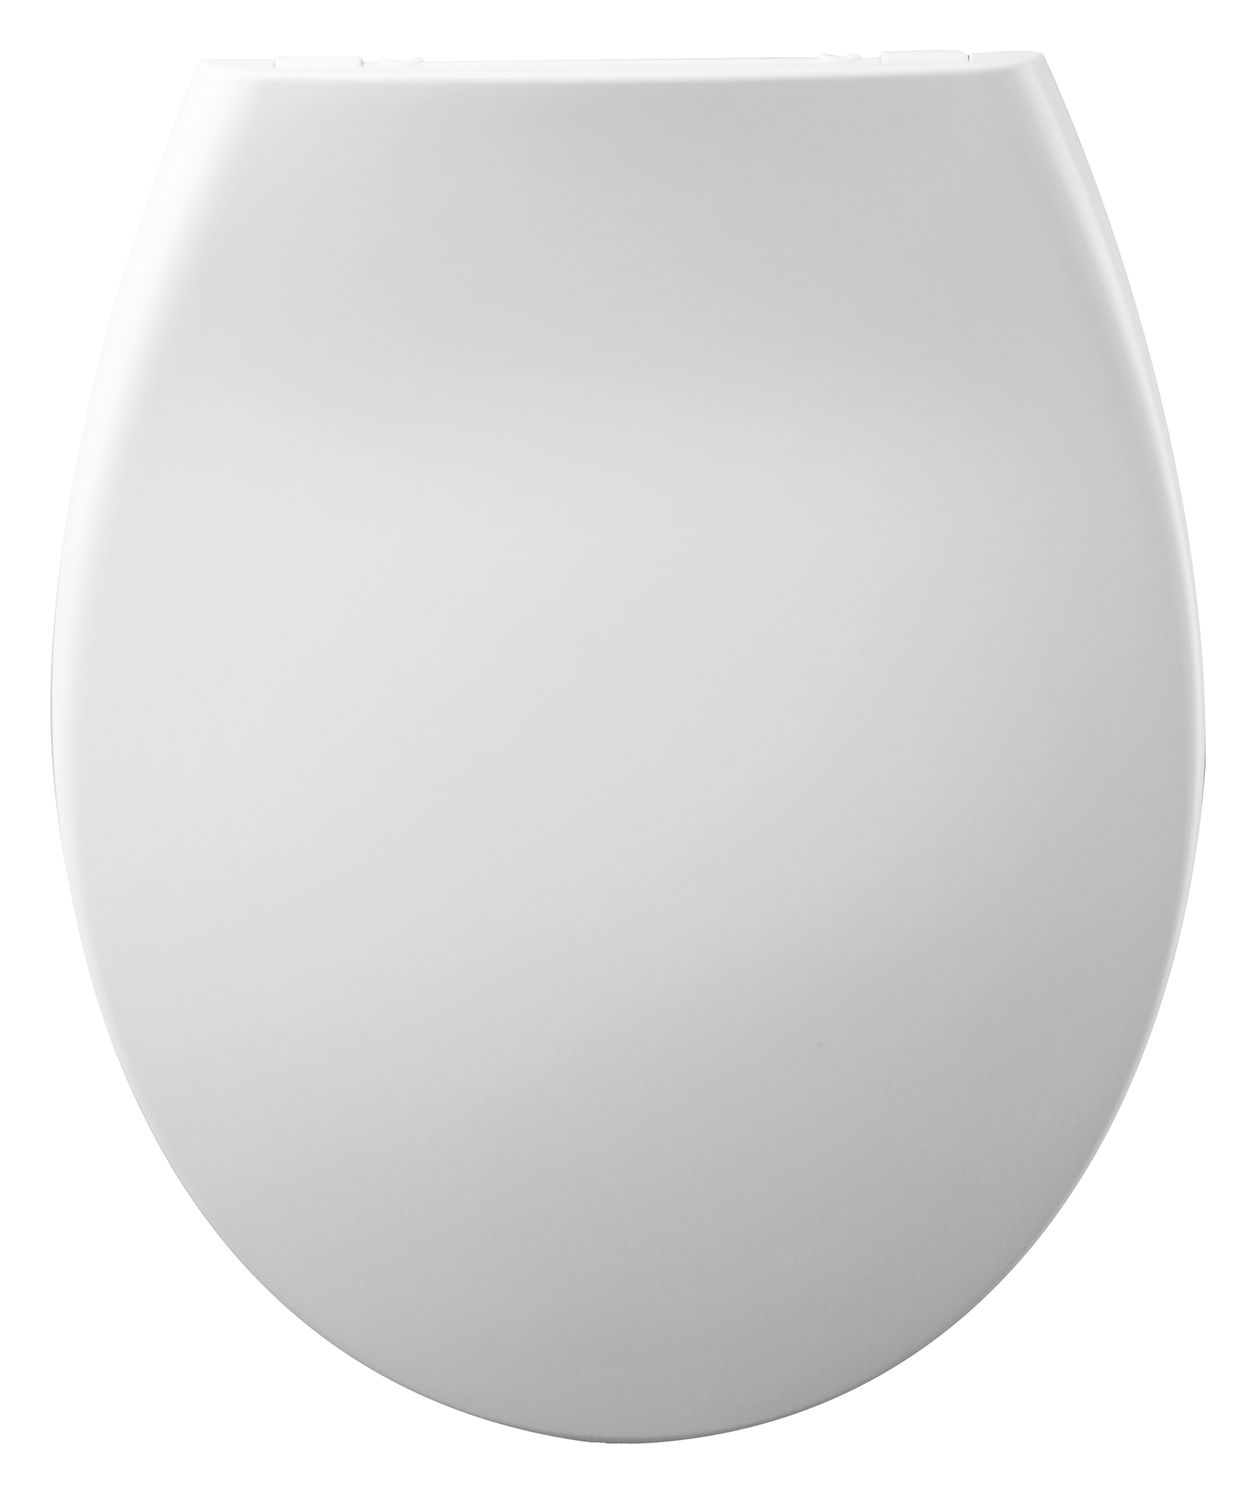 Image of Wickes Thermoset Plastic Soft Close Toilet Seat - White